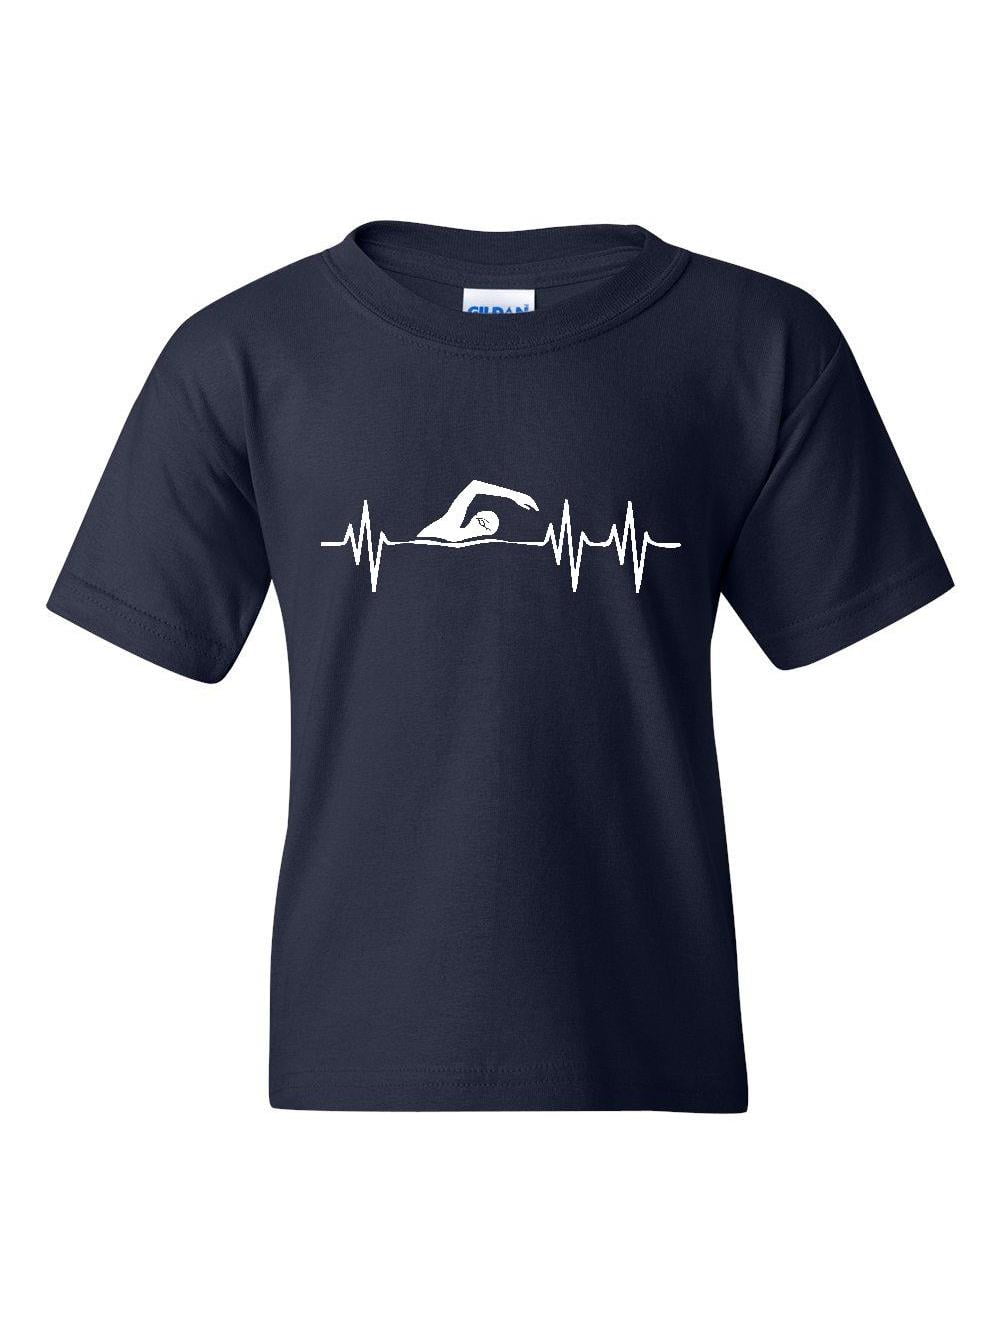 Swimmer T-shirt